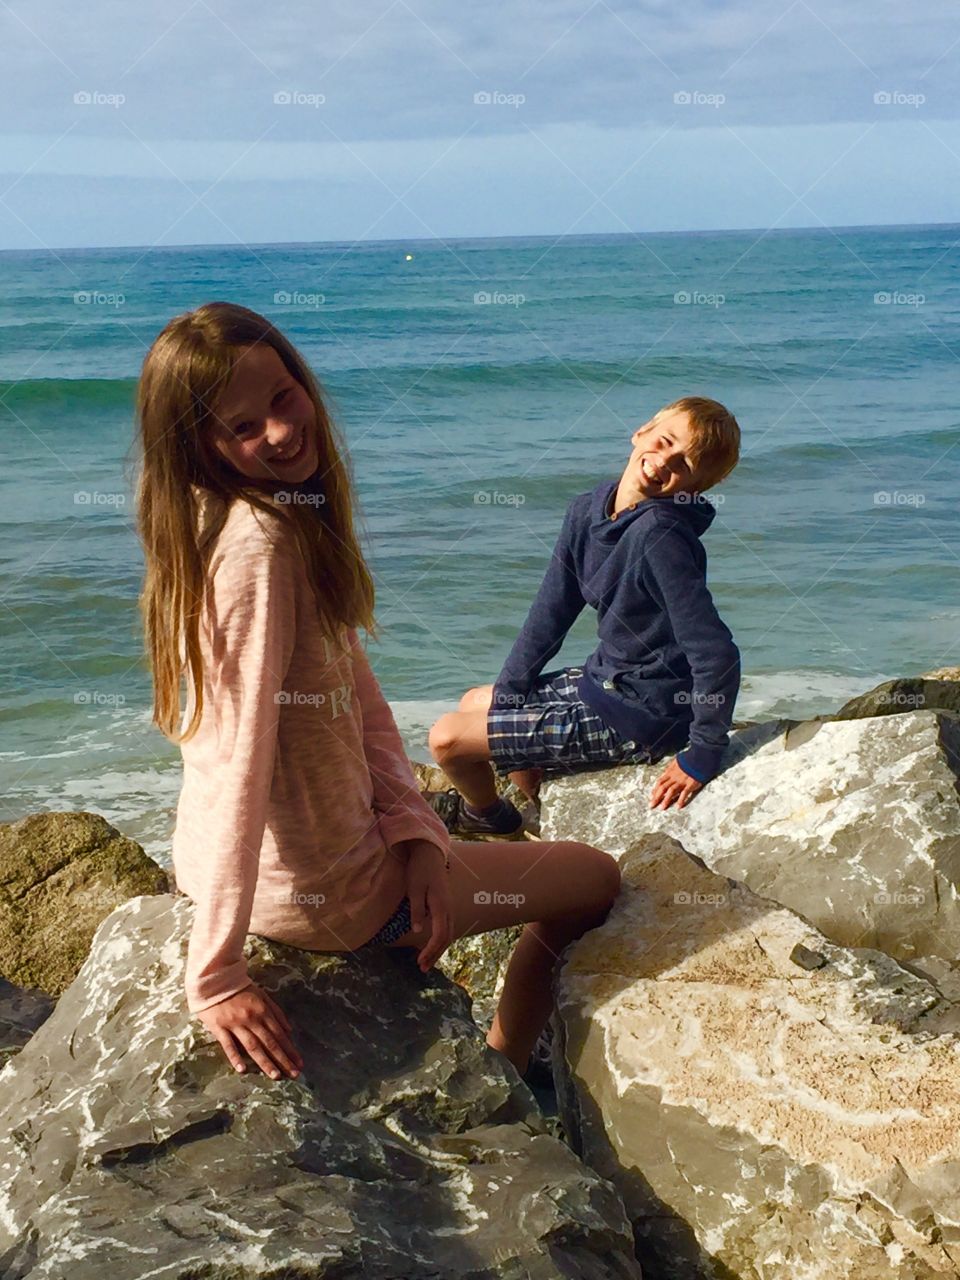 My kids near the ocean